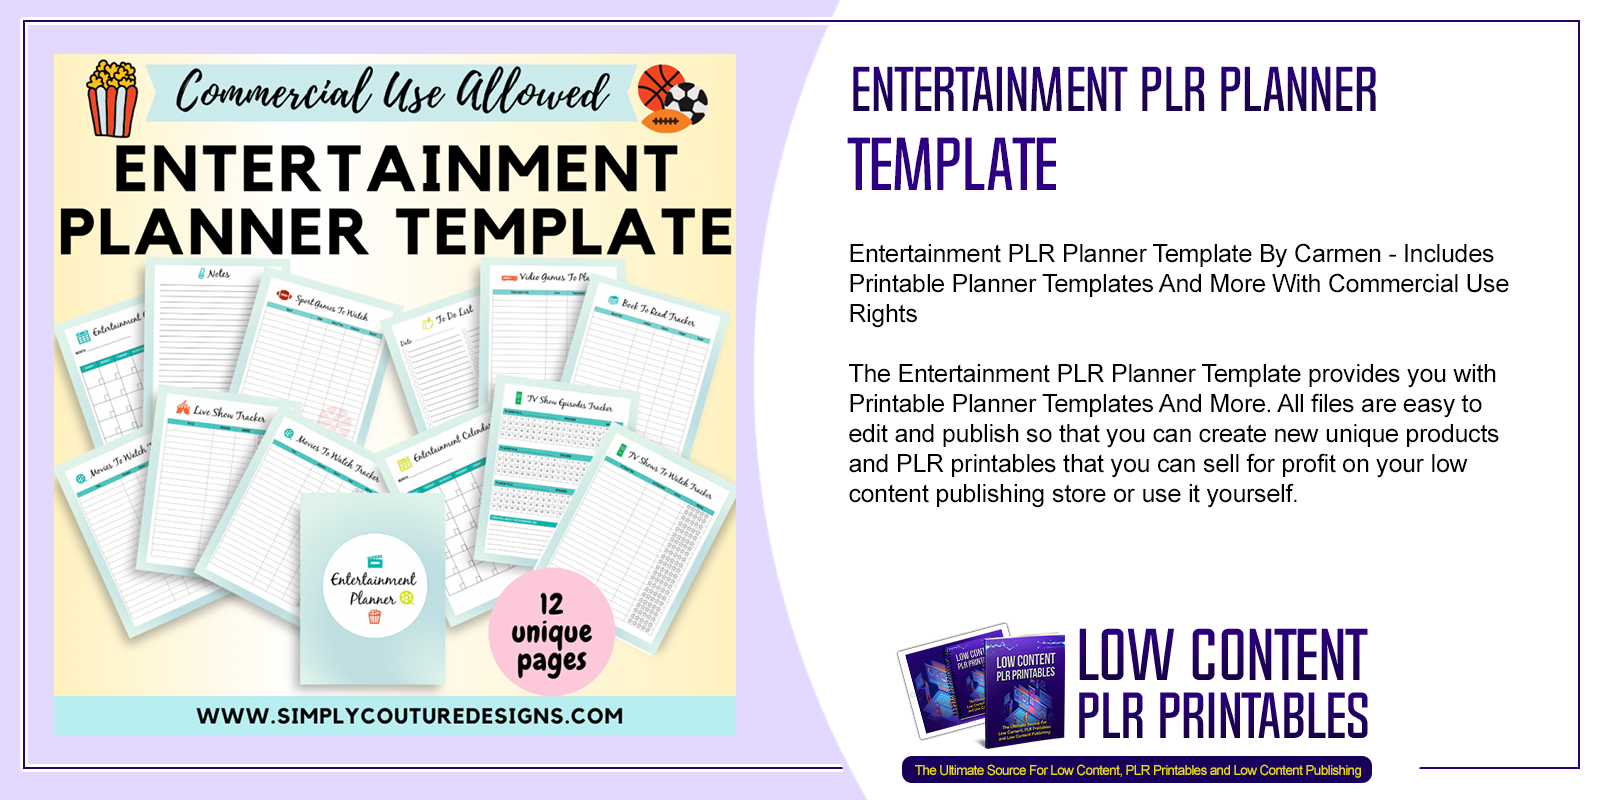 Entertainment PLR Planner Template